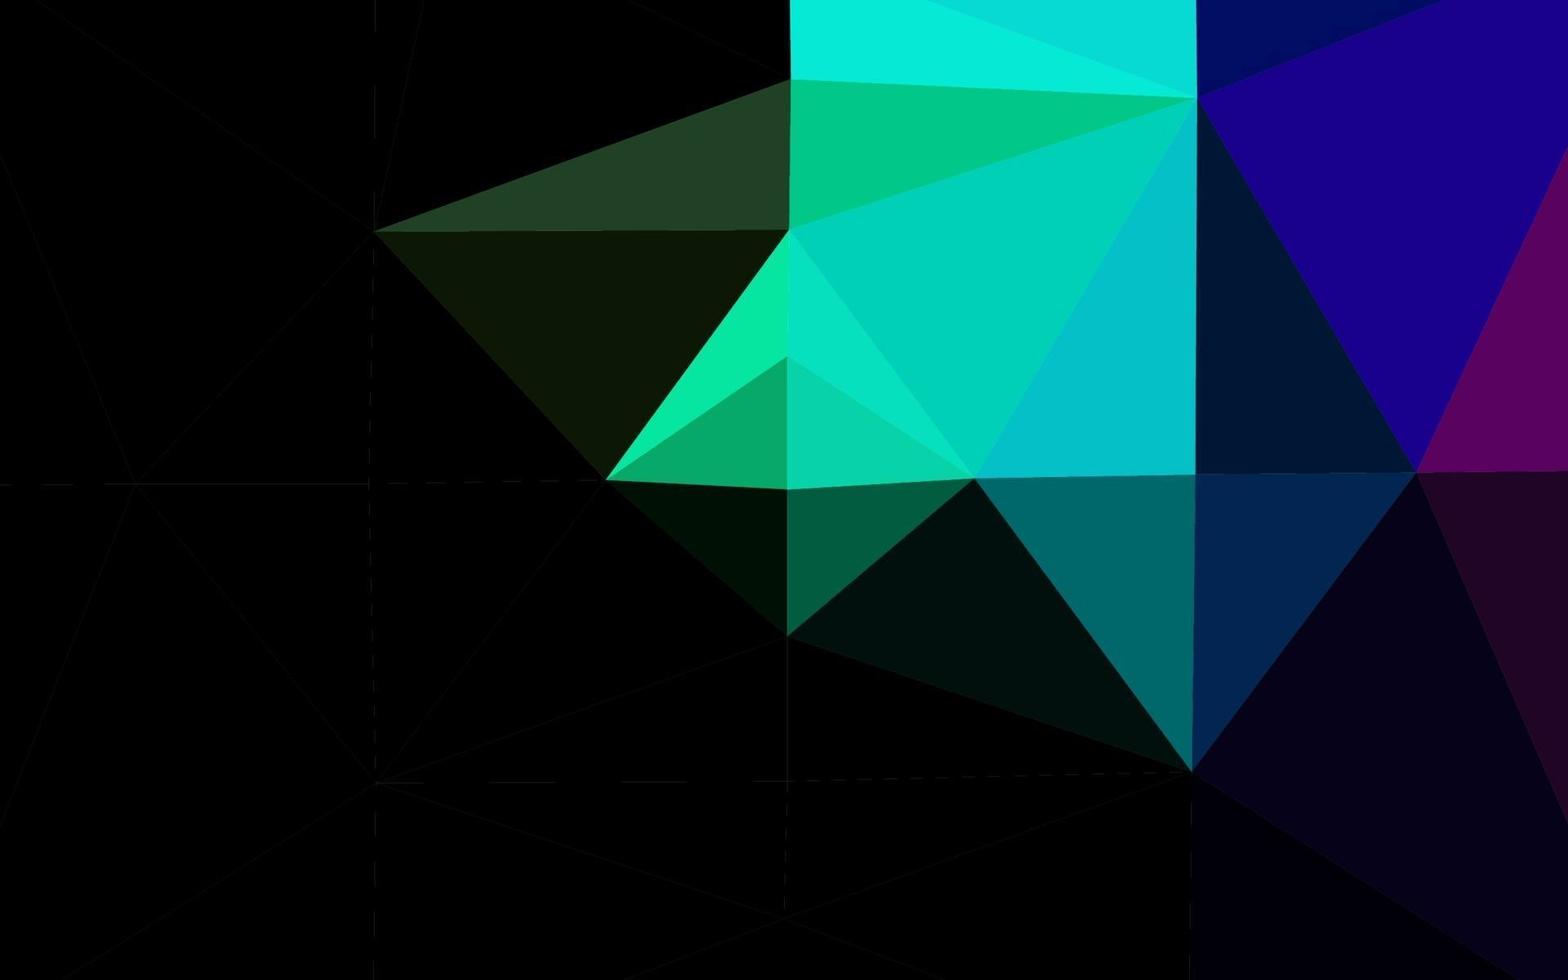 multicolore foncé, abstrait de polygone vectoriel arc-en-ciel.